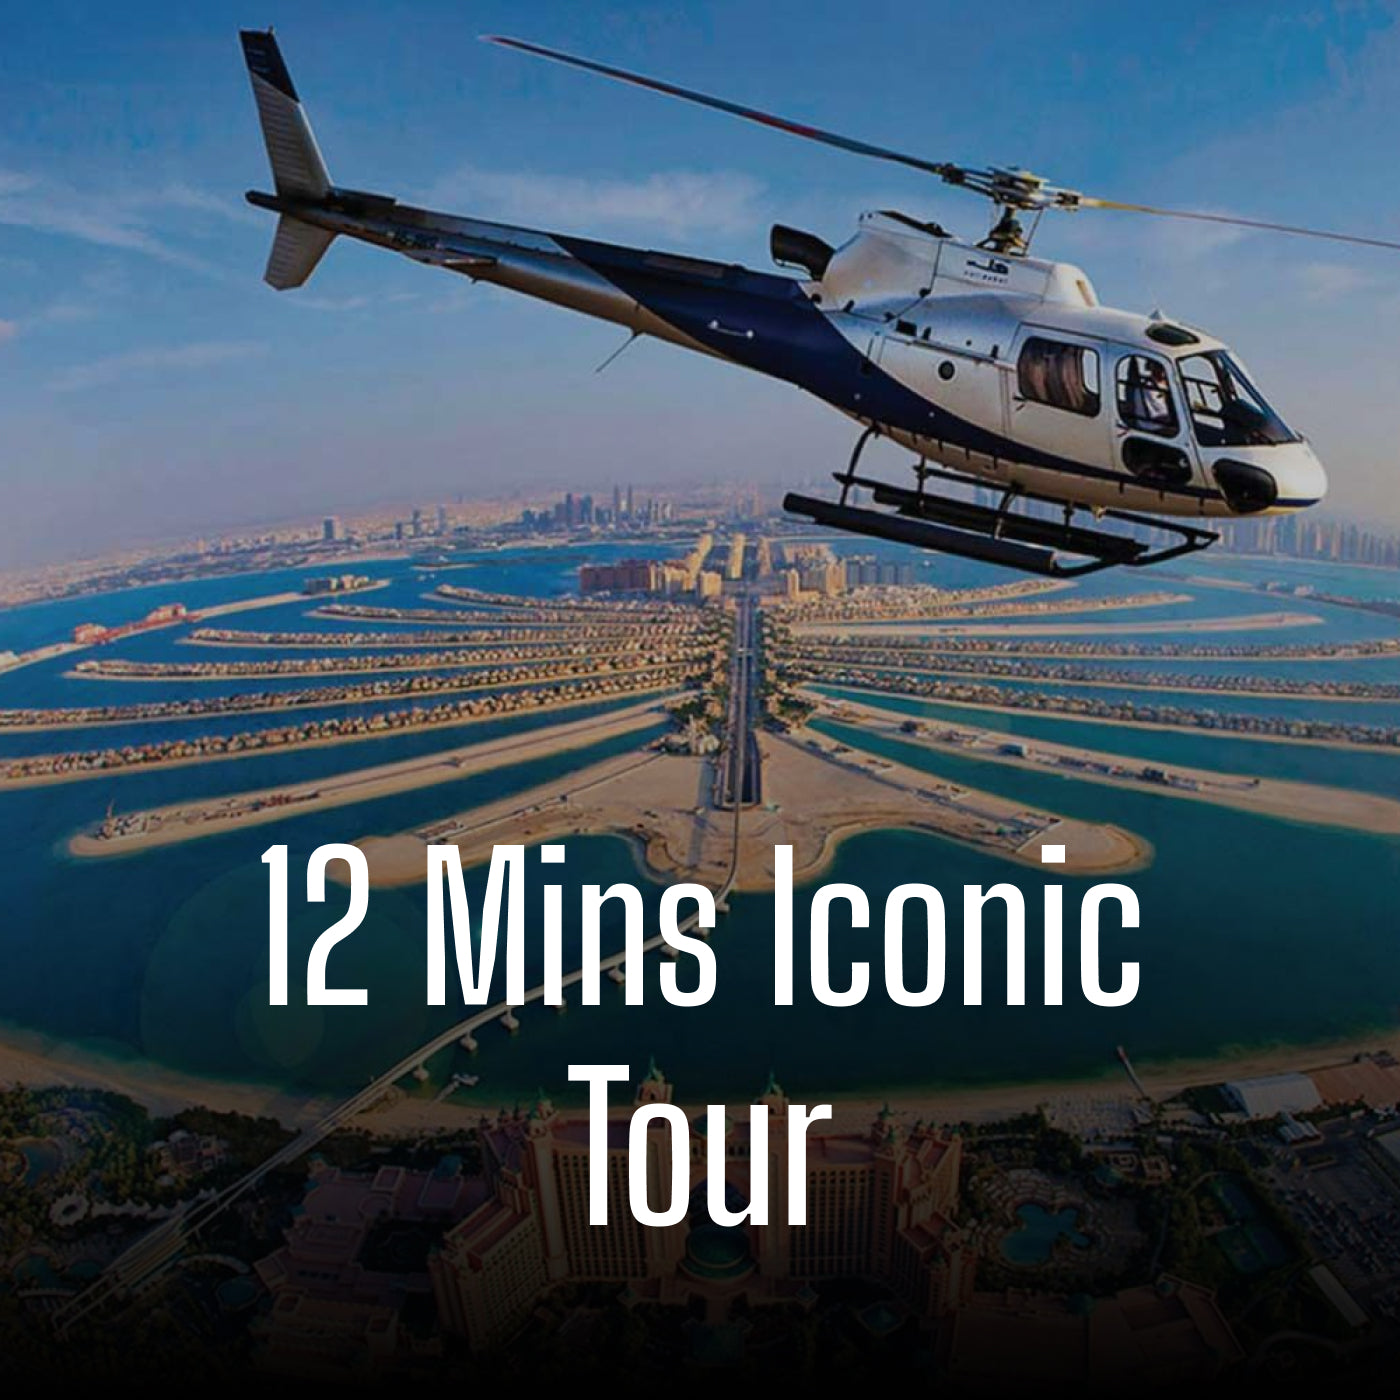 12 Mins Iconic Tour